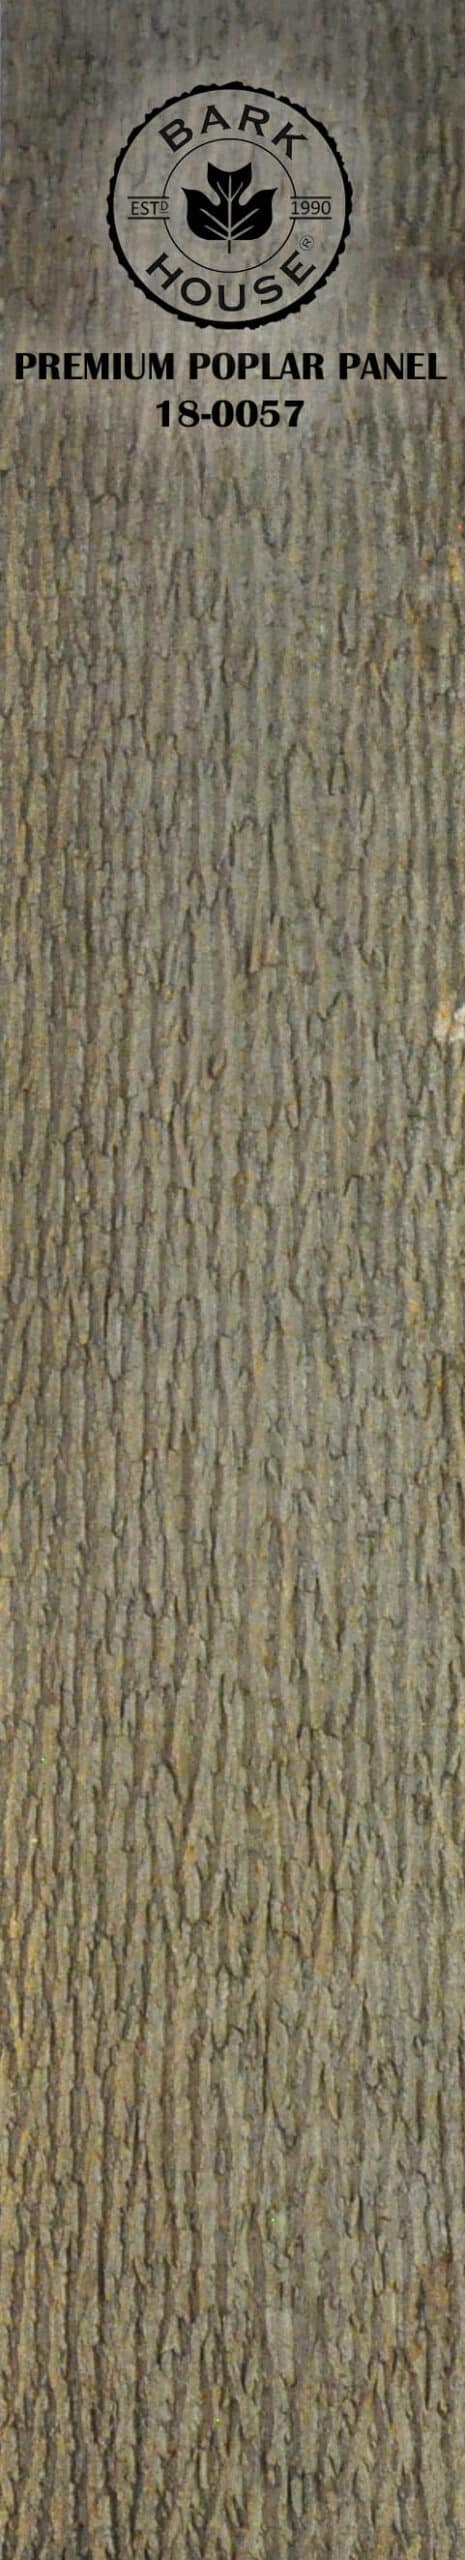 Buy large Bark House Poplar Bark Wall Panels Sheets Premium 18-0057